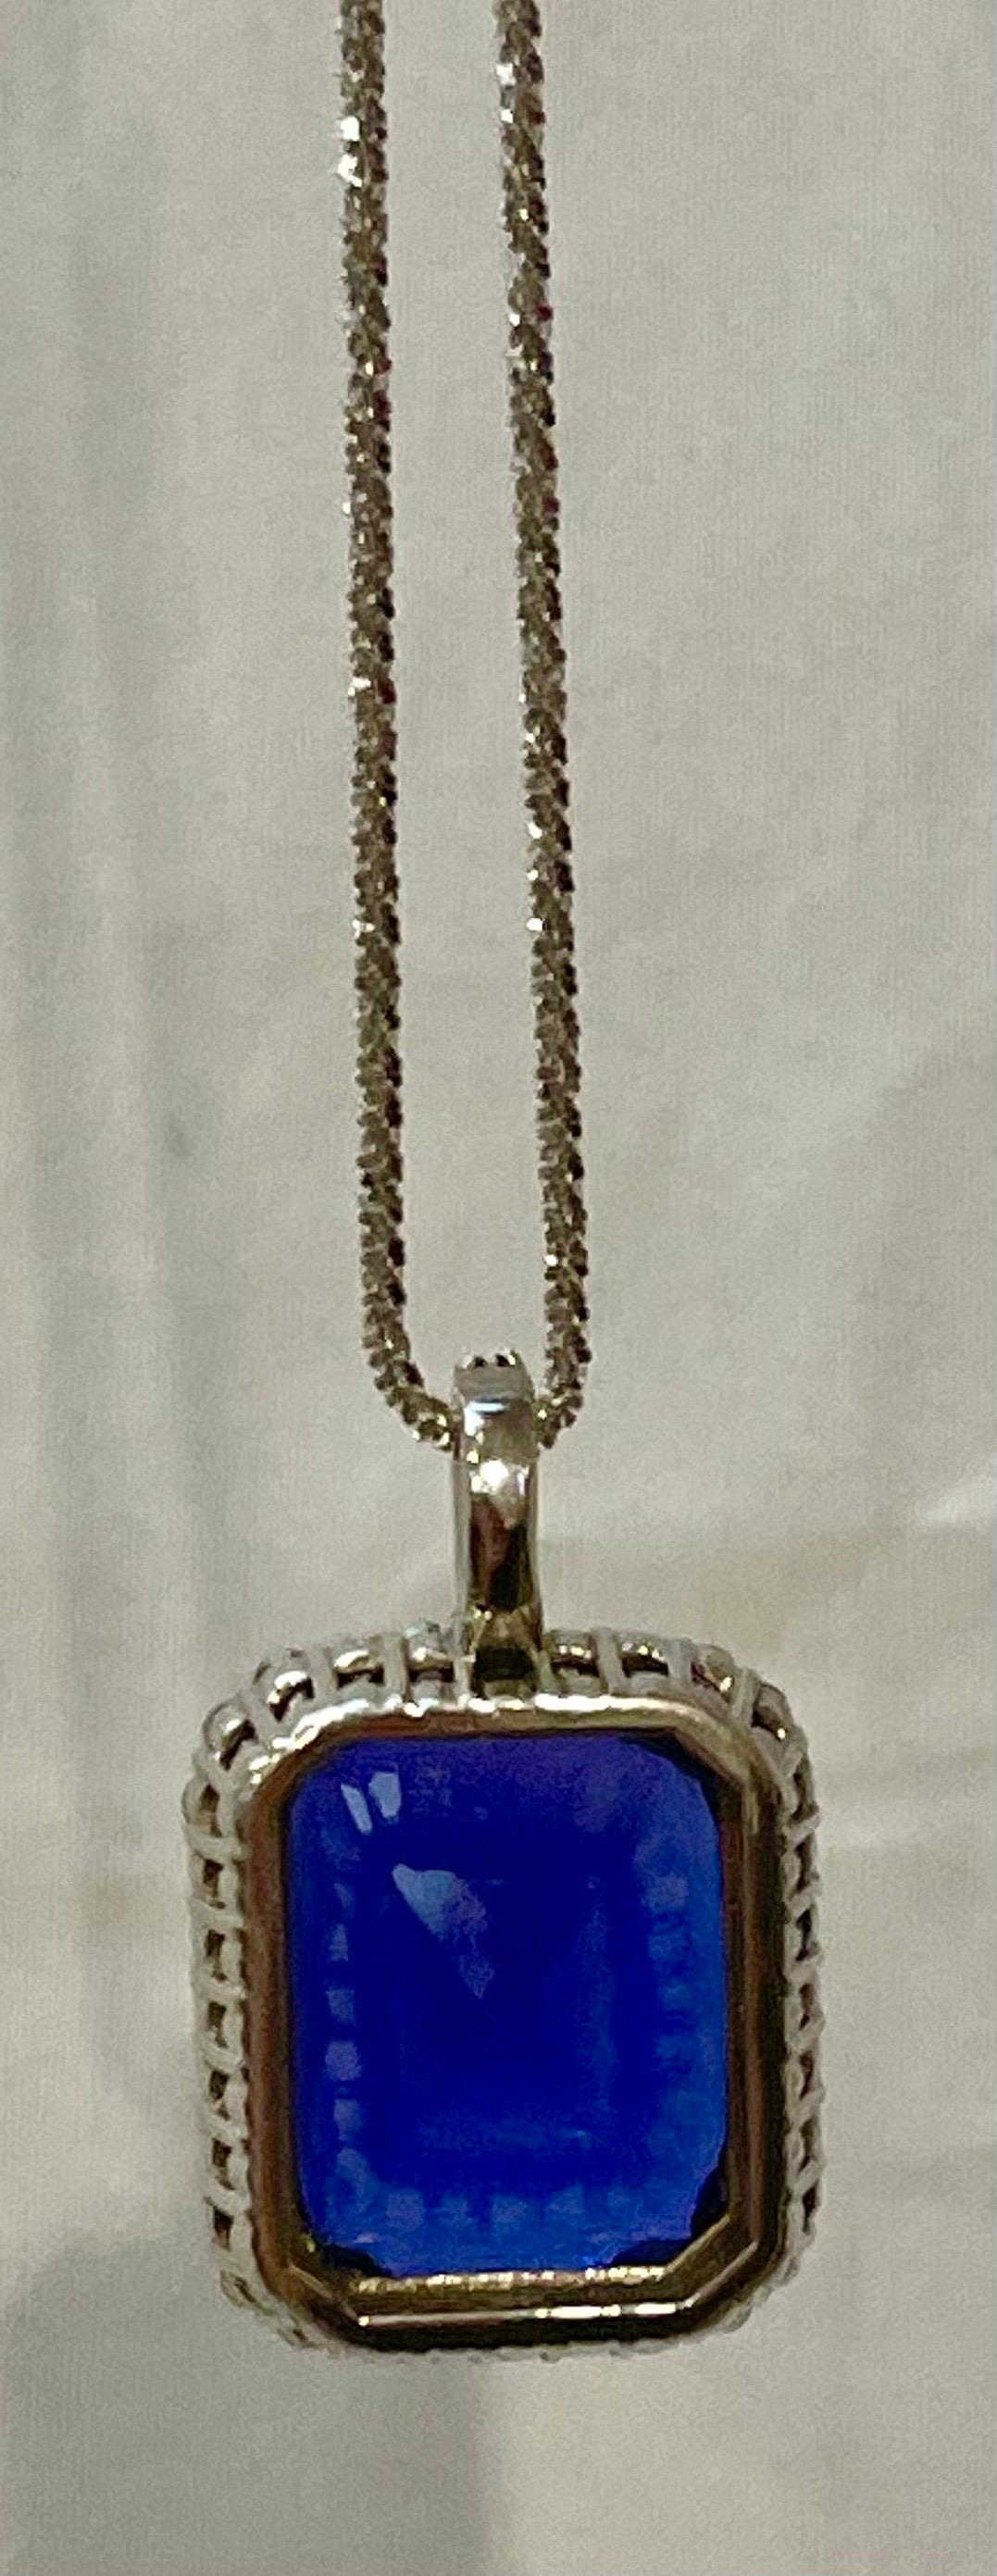 37.5 Carat Tanzanite Necklace & Diamond Pendant with Chain 14 Karat White Gold For Sale 7